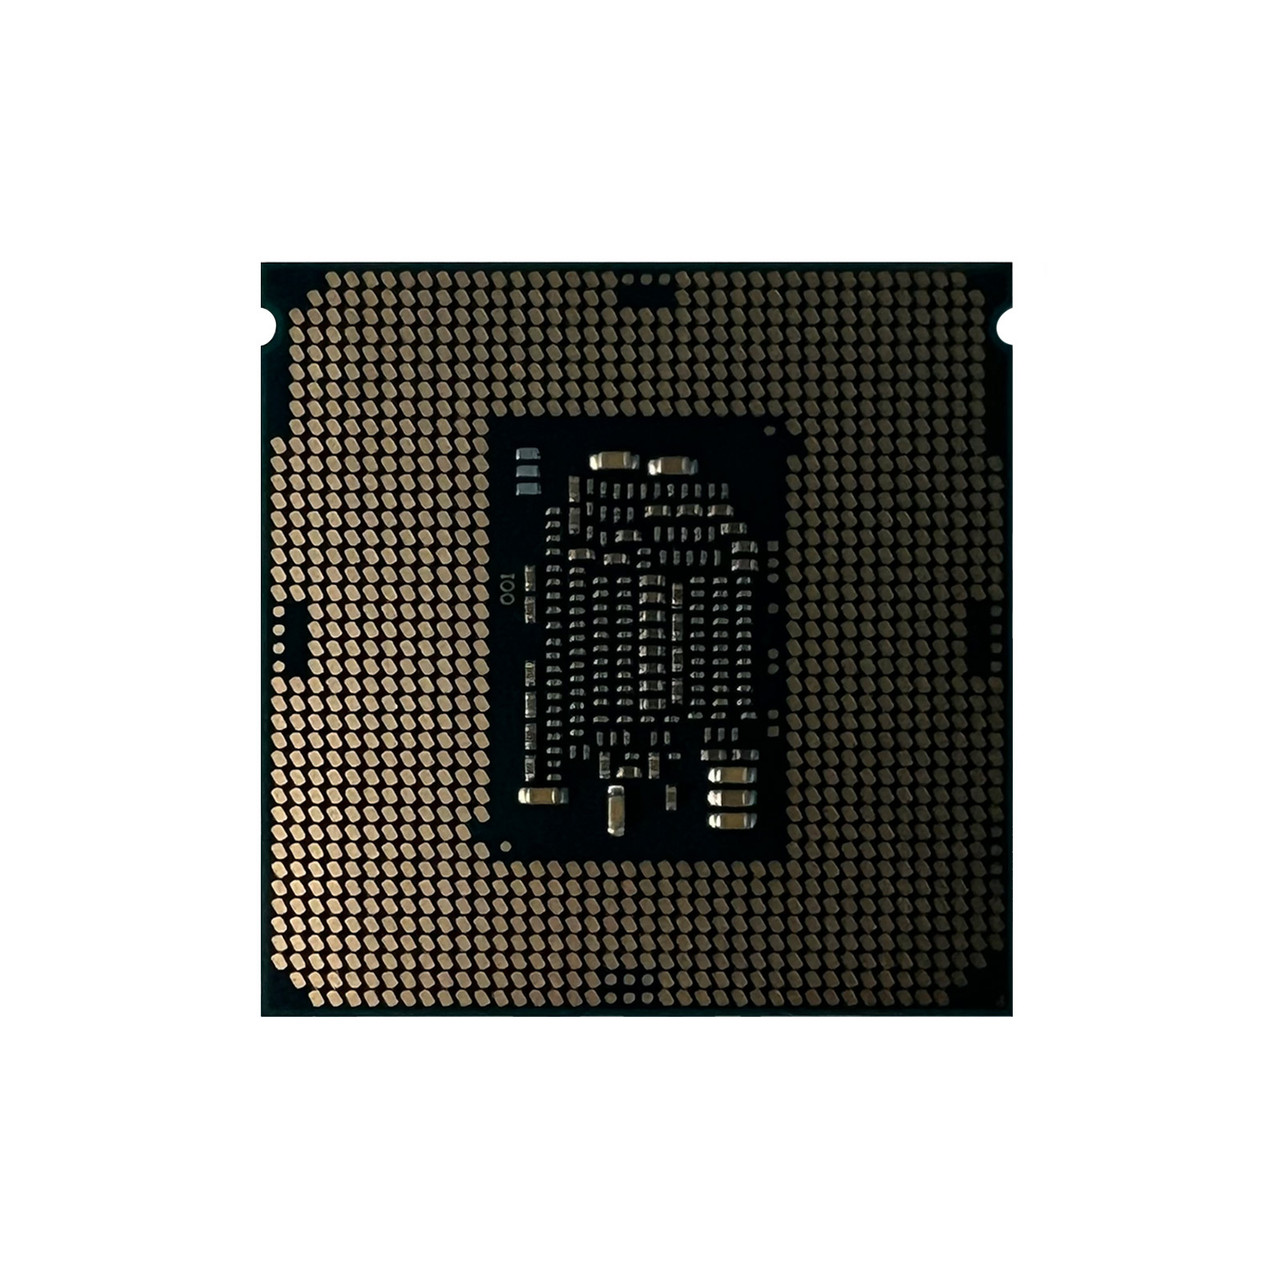 HP 872140-L21 DL20 Gen9 Xeon E3-1225 V6 QC 3.3Ghz 8MB 8GTs Processor